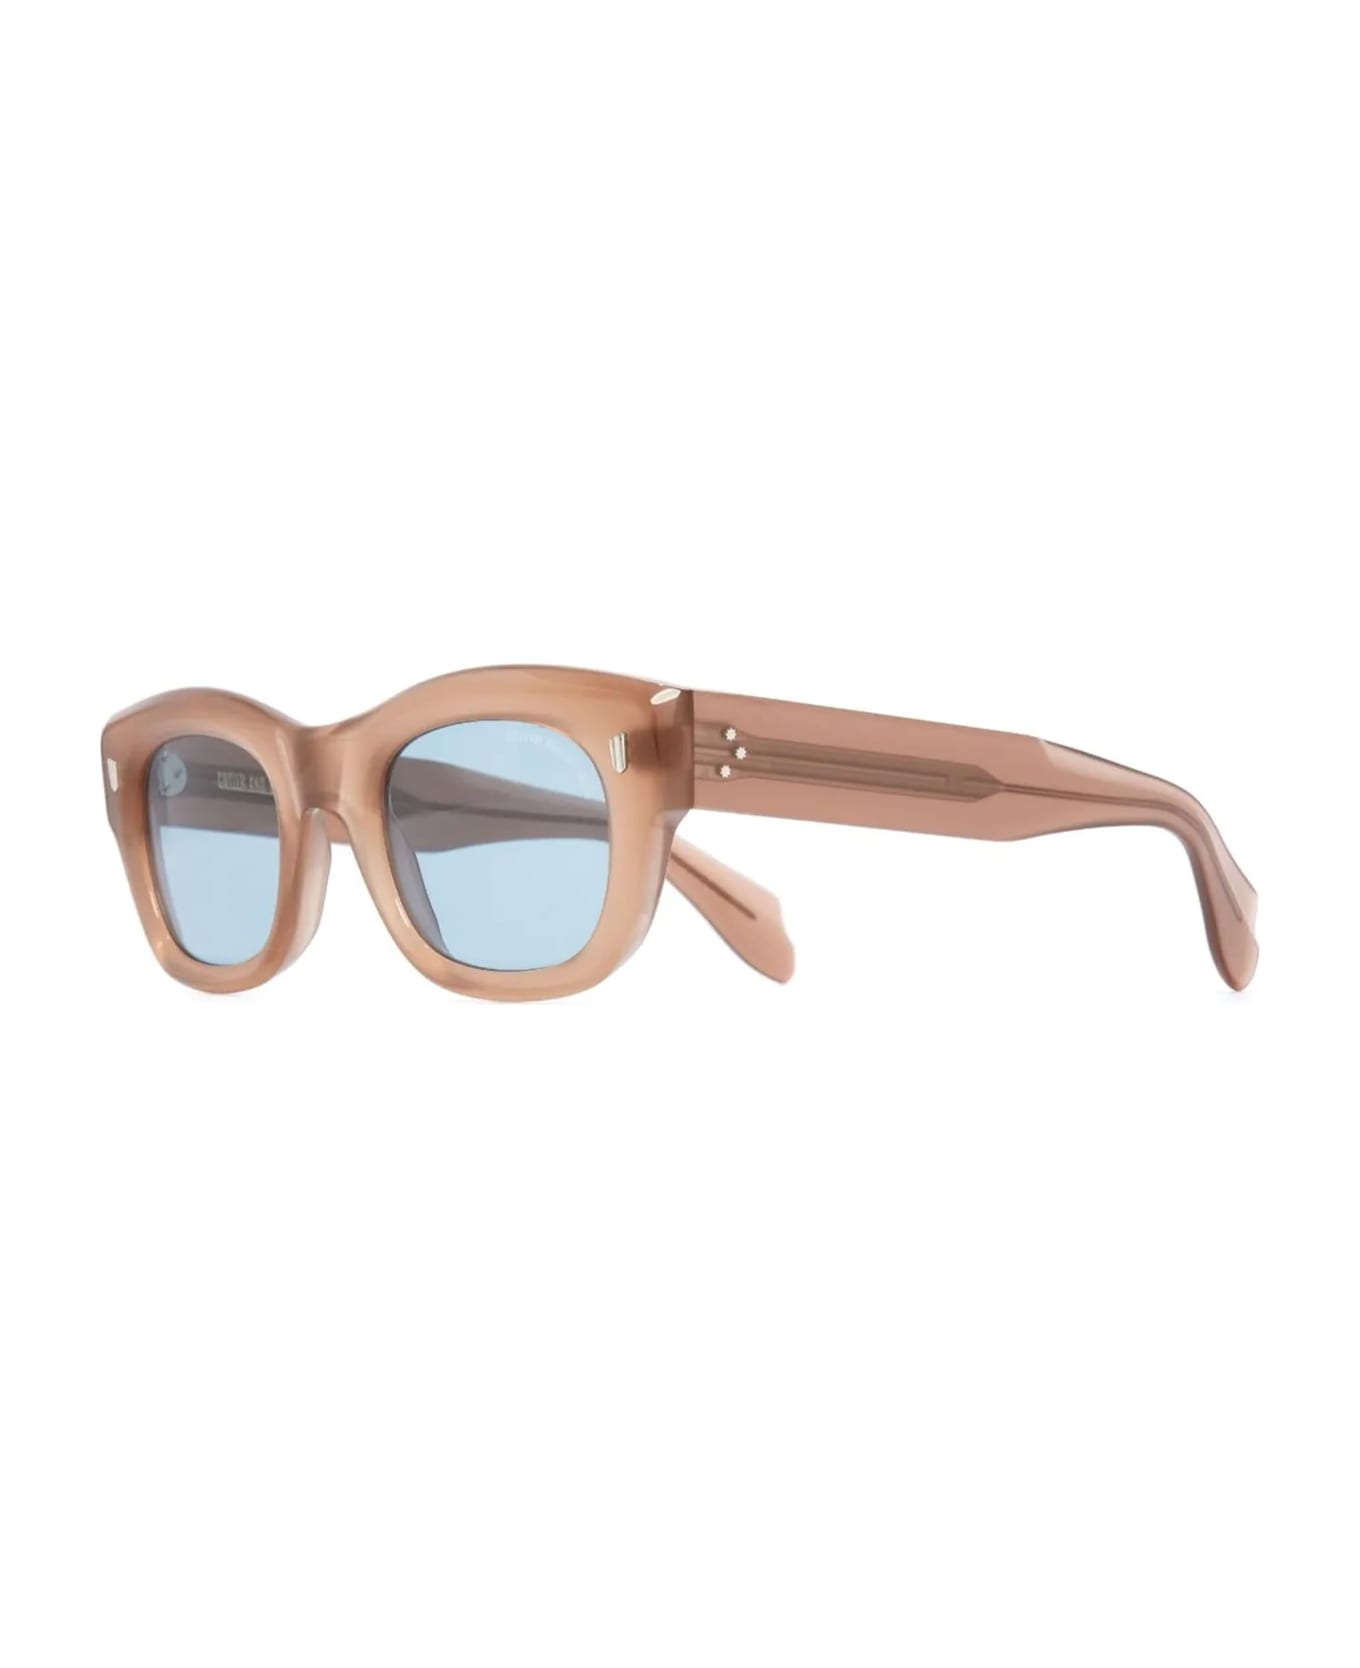 Cutler and Gross 9261/ Humble Potato Sunglasses - pink